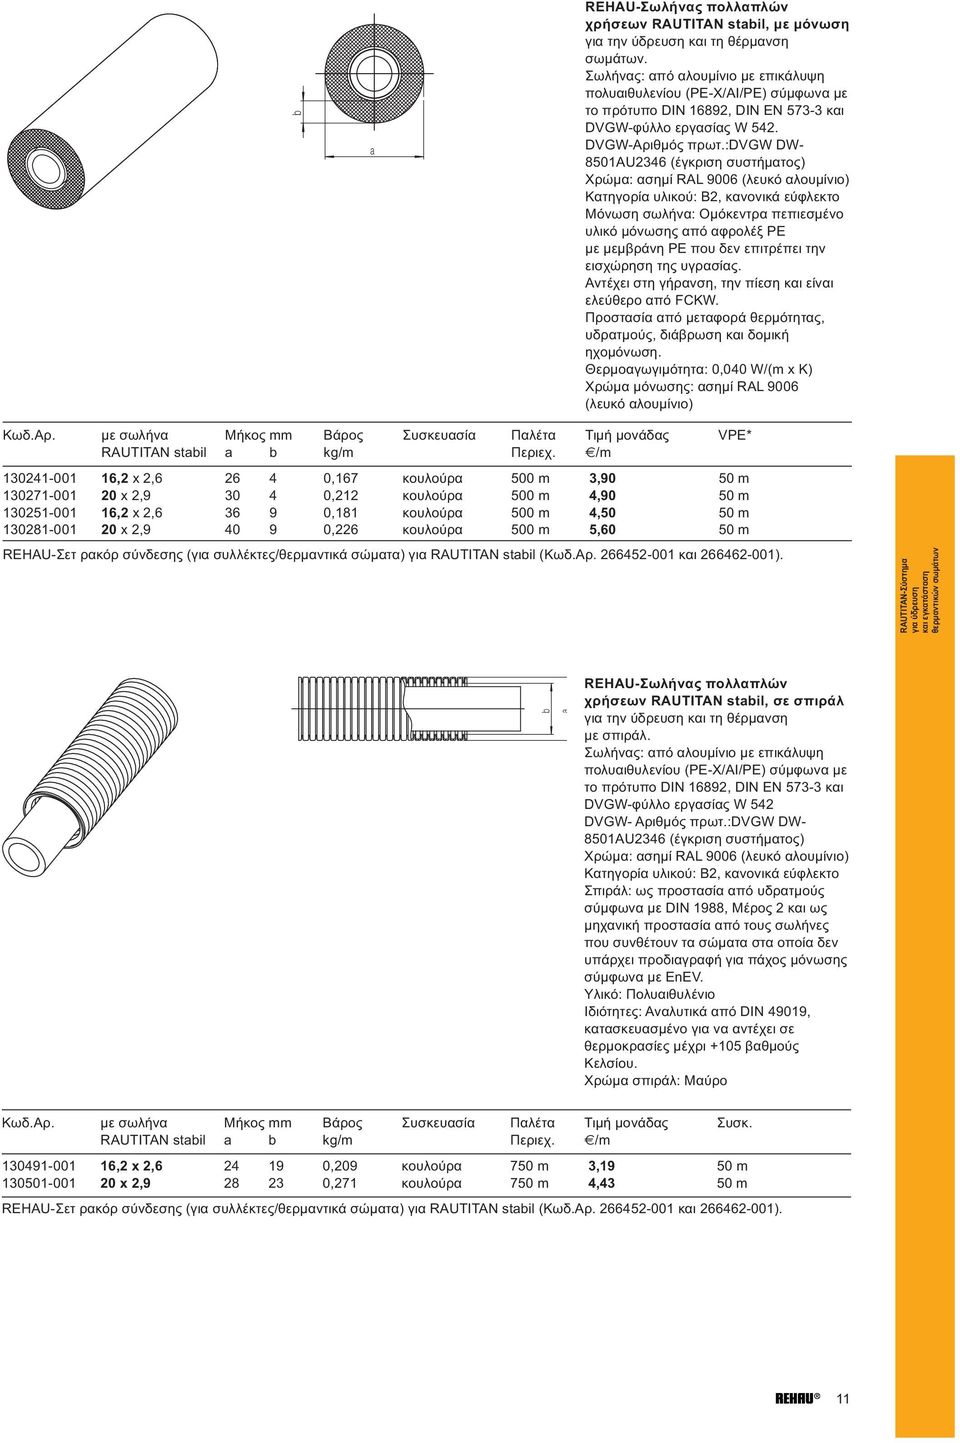 :dvgw DW- 8501AU2346 (έγκριση συστήματος) Χρώμα: ασημί RAL 9006 (λευκό αλουμίνιο) Κατηγορία υλικού: B2, κανονικά εύφλεκτο Μόνωση σωλήνα: Ομόκεντρα πεπιεσμένο υλικό μόνωσης από αφρολέξ PE με μεμβράνη